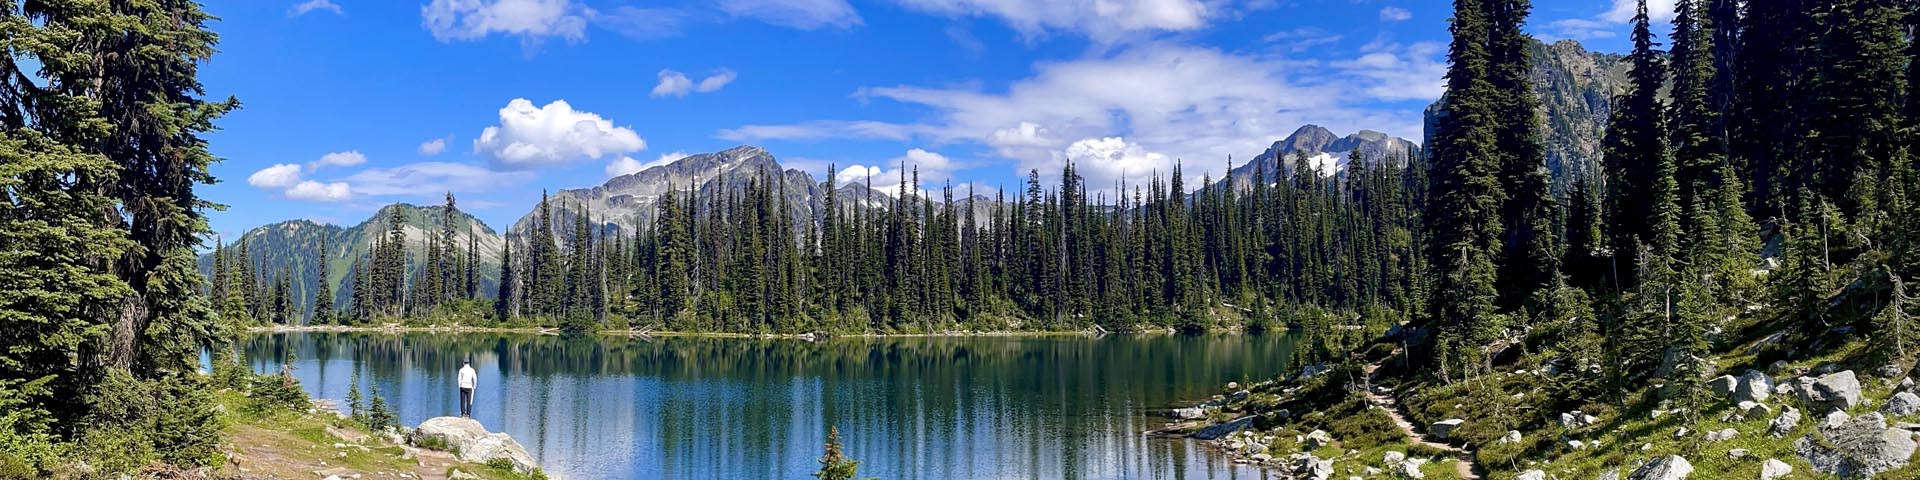  A mountain alpine lake with a rocky shoreline